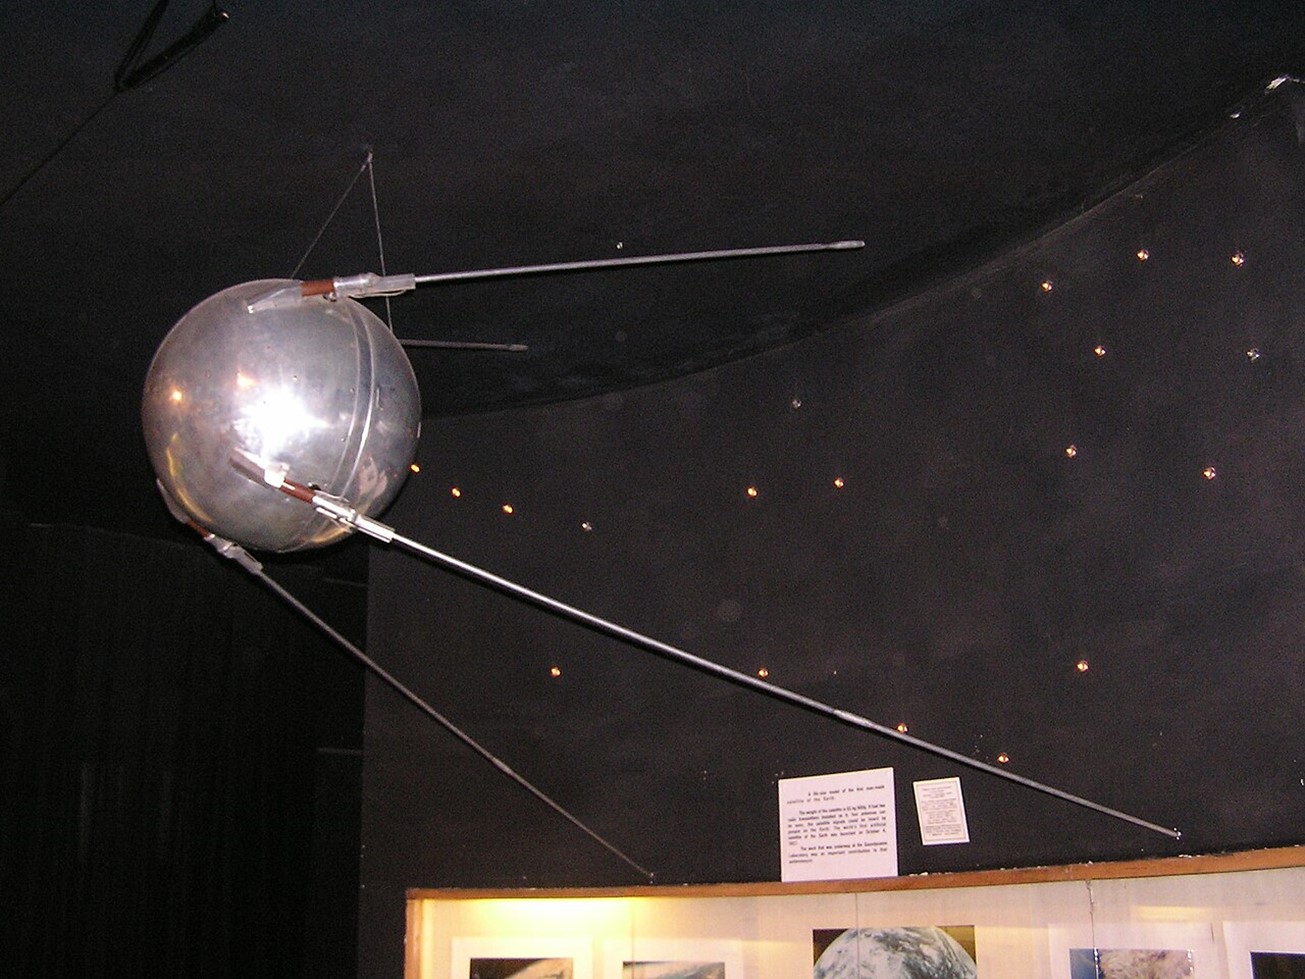 Replica of Sputnik 1